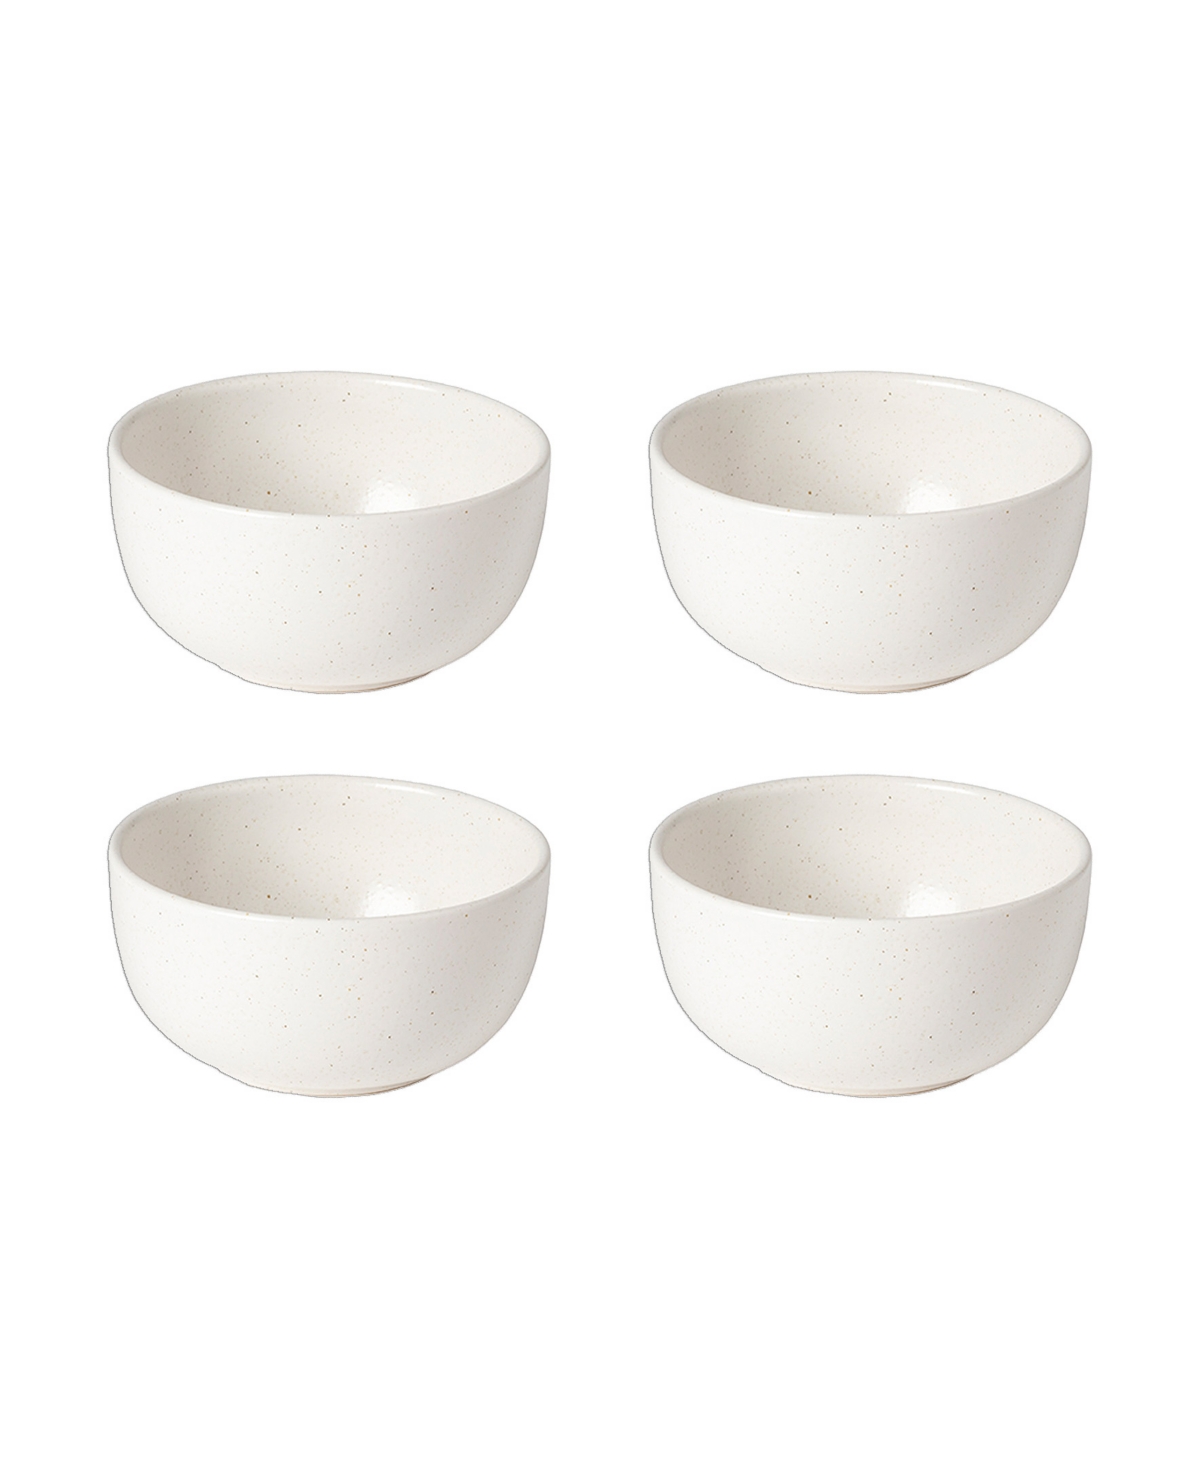 Pacifica Dinnerware Cereal Bowls, Set of 4, 21 Oz - Salt